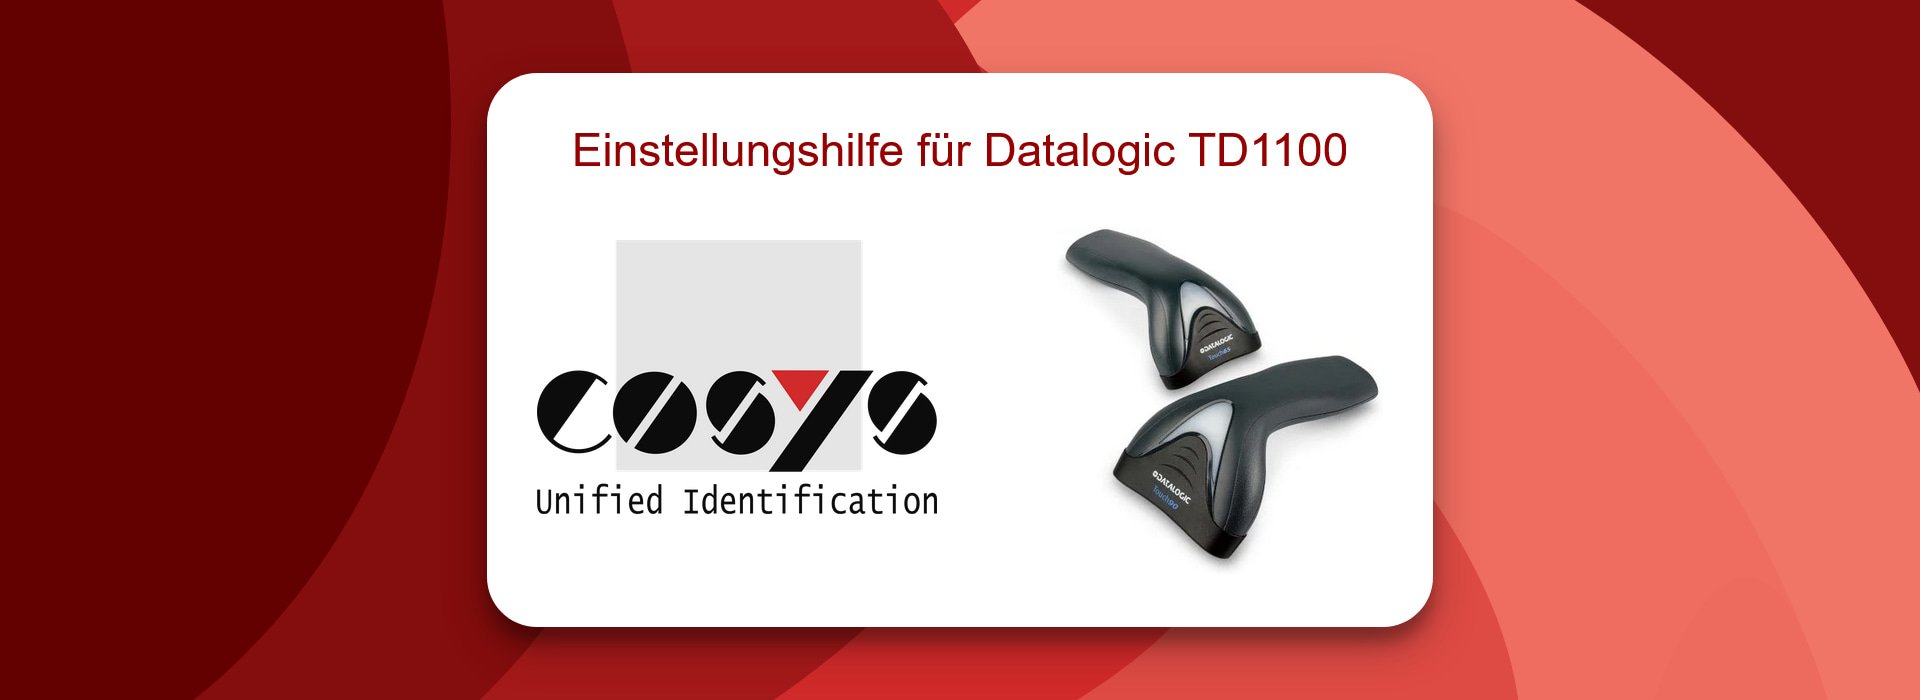 Datalogic TD1100 konfigurieren: COSYS Suppport